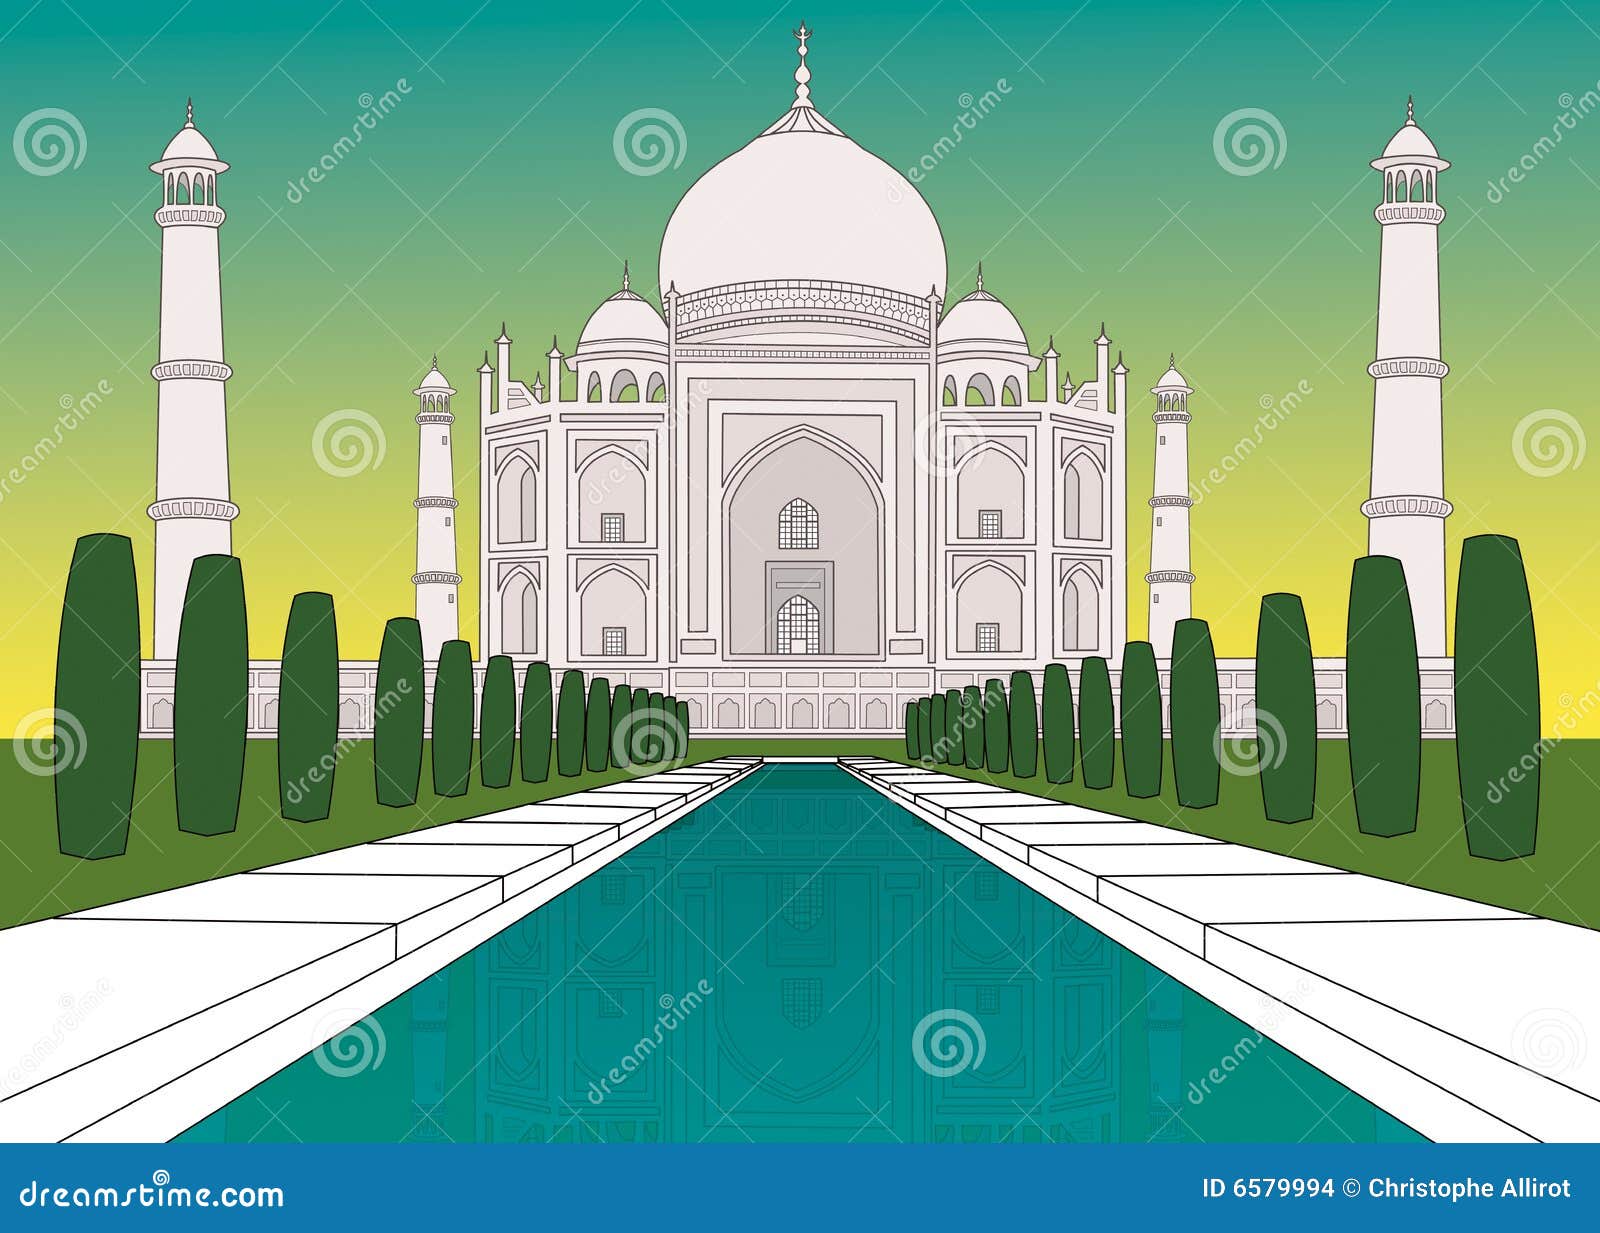 How to draw the Taj Mahal | Step by step Drawing tutorials-saigonsouth.com.vn